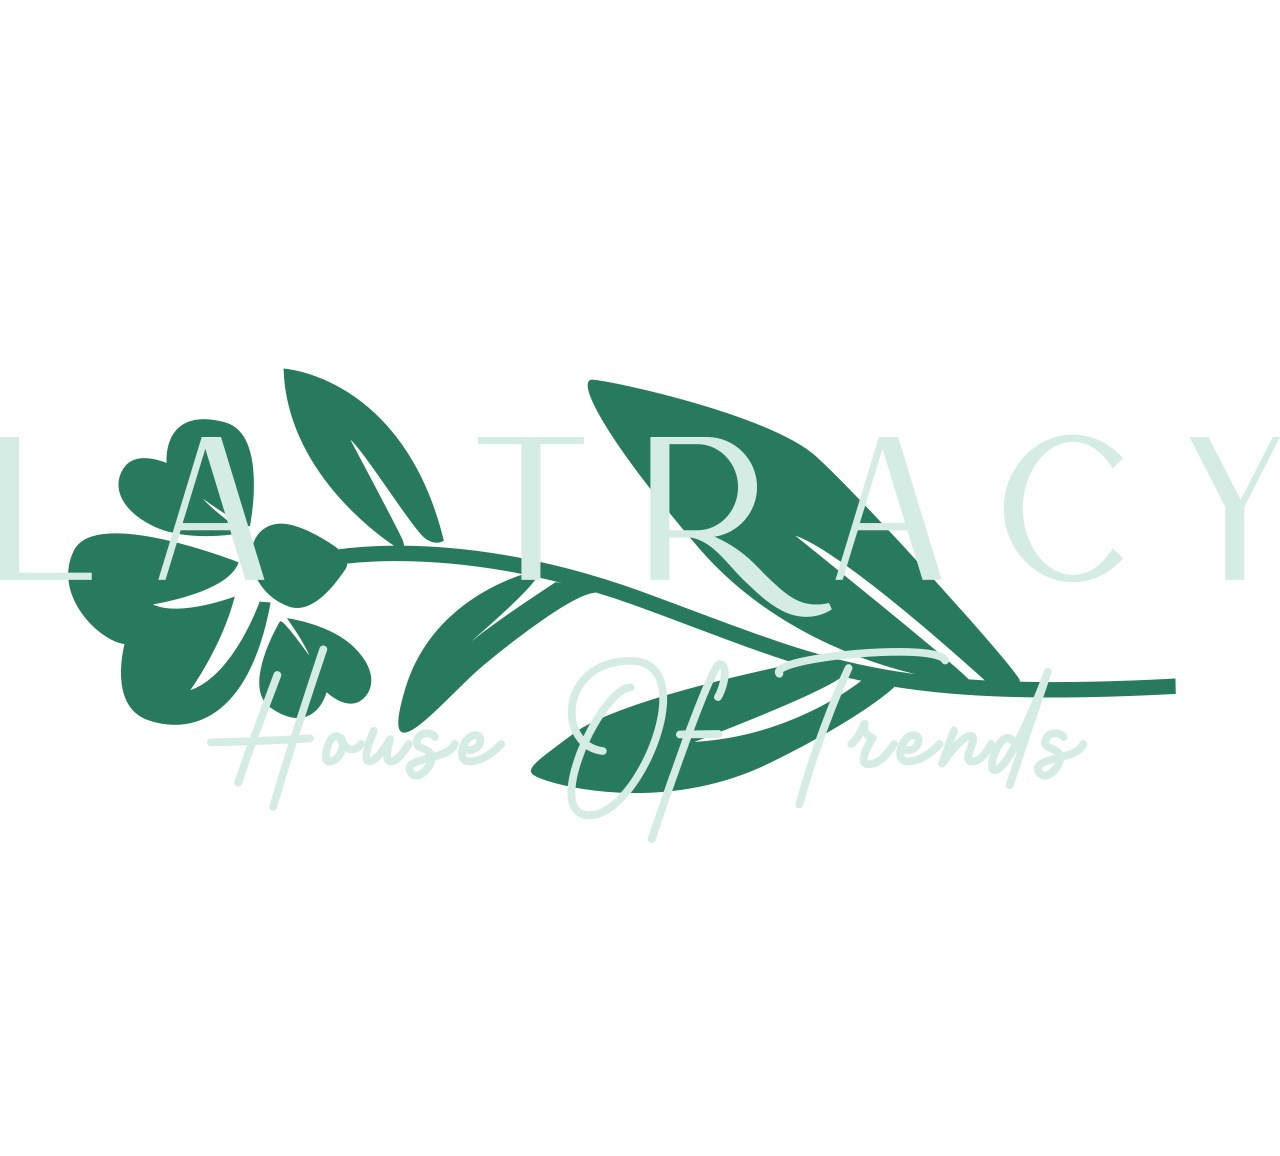 La Tracy's logo